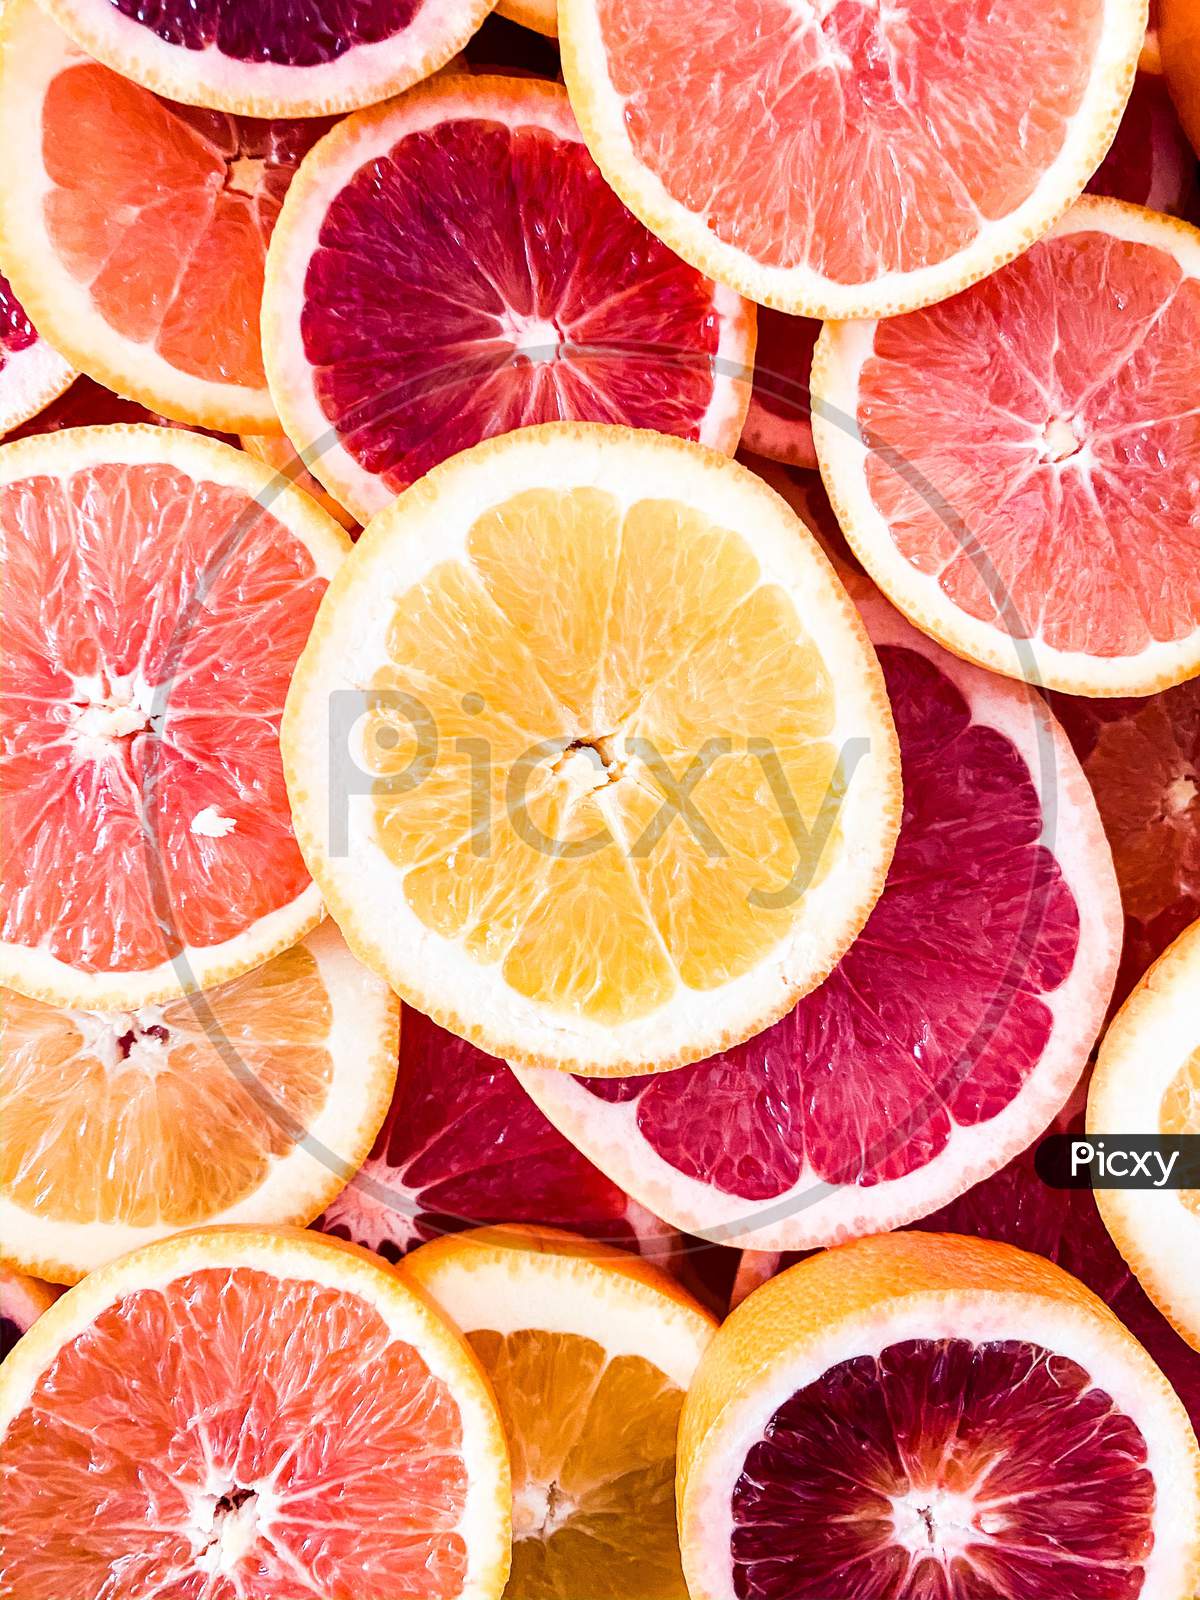 Fresh and organic grapefruit slices.Close-up. Studio photography.